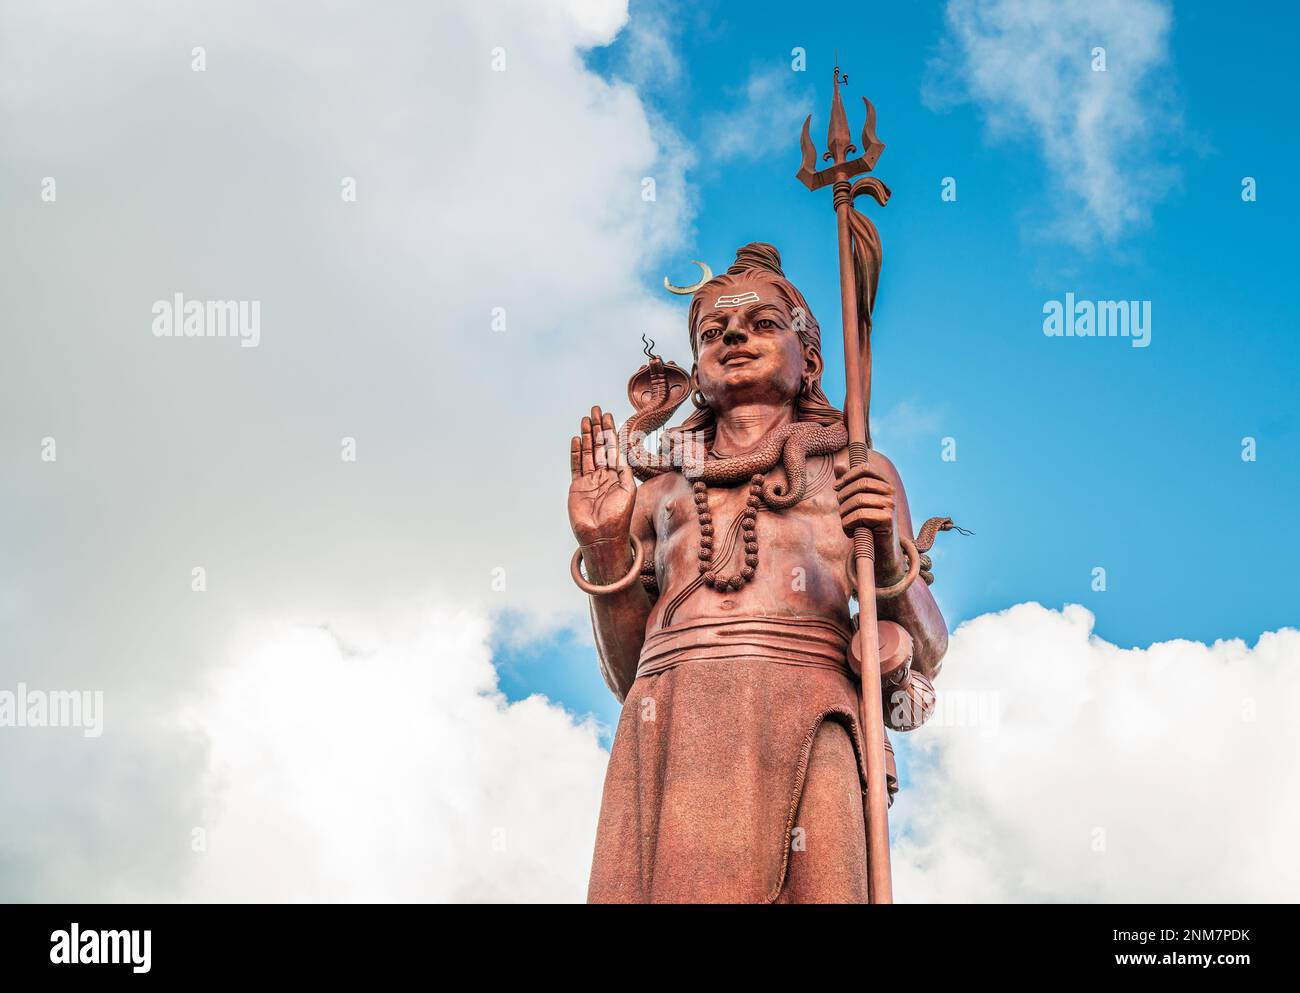 Huge Shiva statue Mangal Mahadev is a 33 m art piece in Ganga talao temple on the blue cloudy sky, Mauritius island. Stock Photo